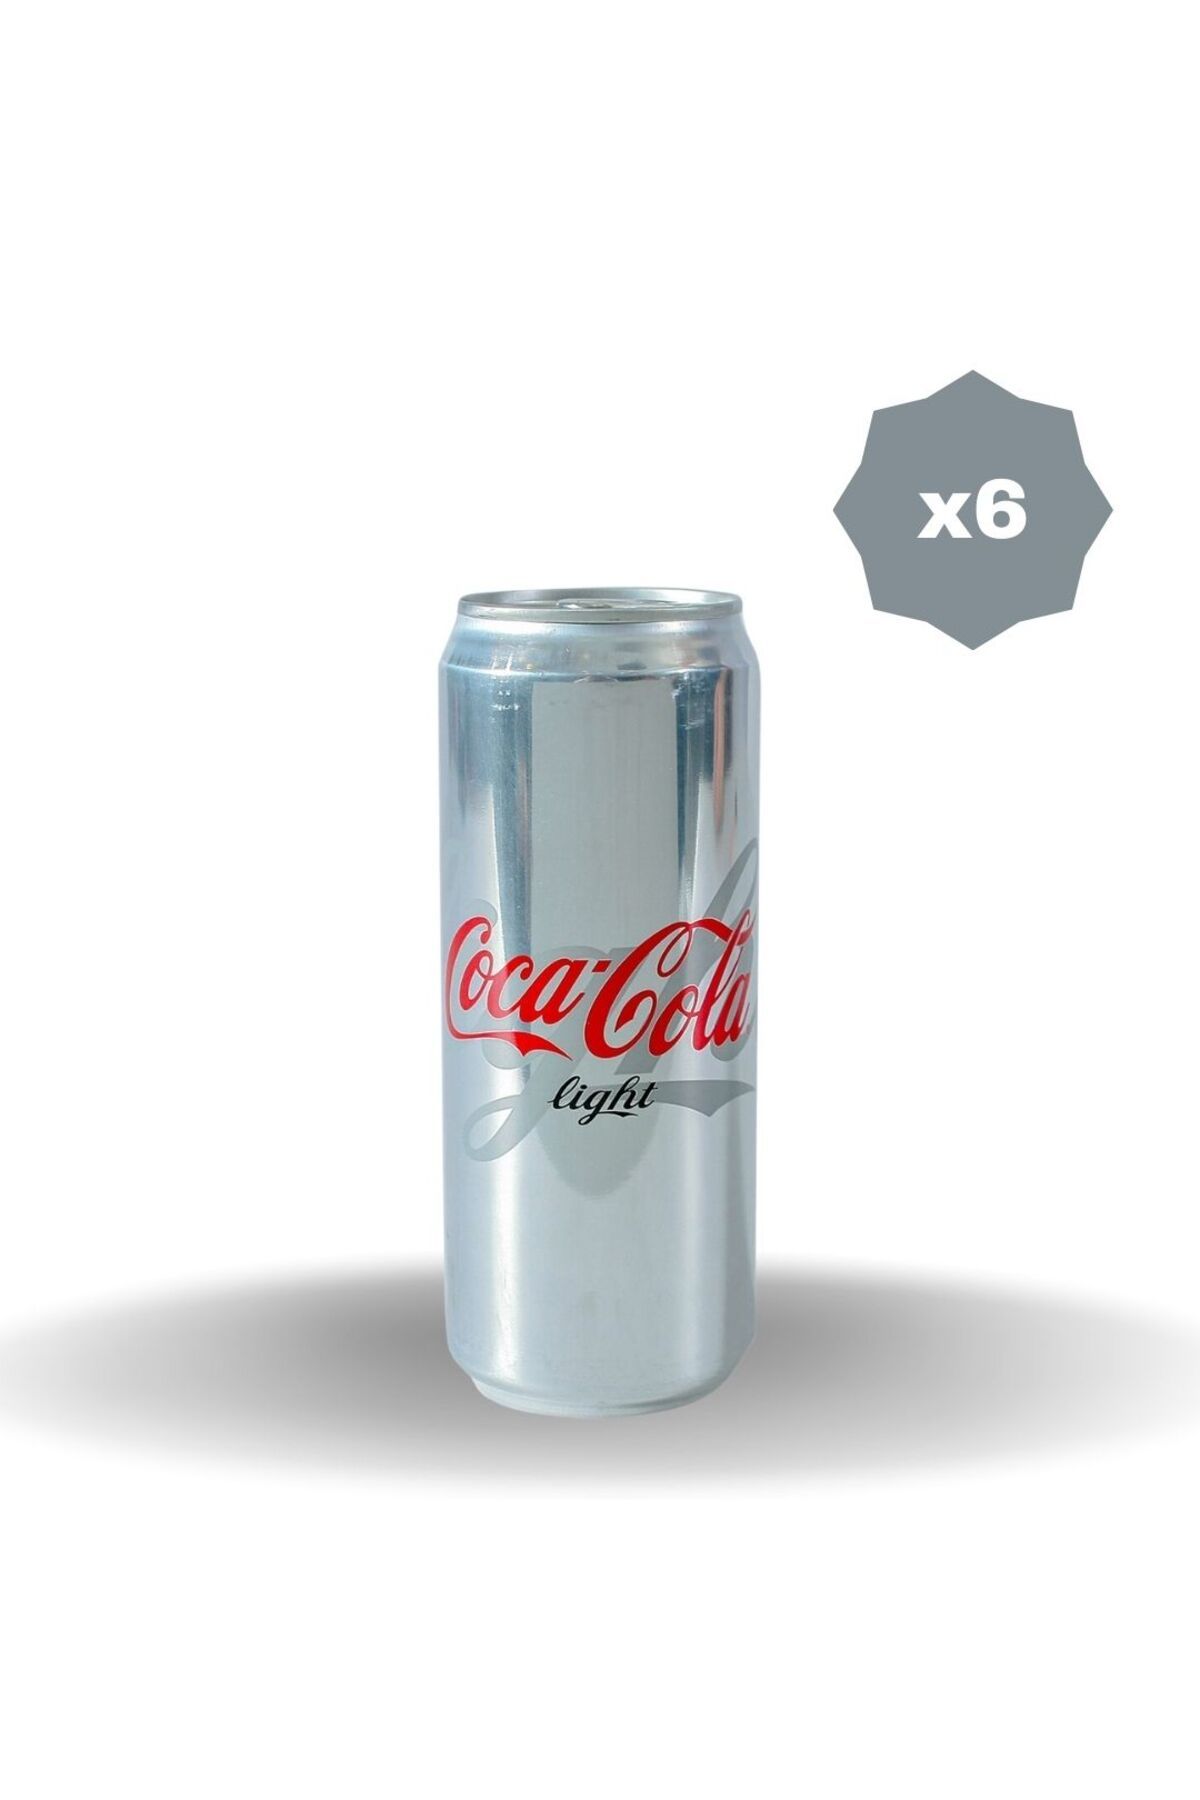 Coca-Cola COCA COLA LİGHT KUTU 330 ML X 6 ADET